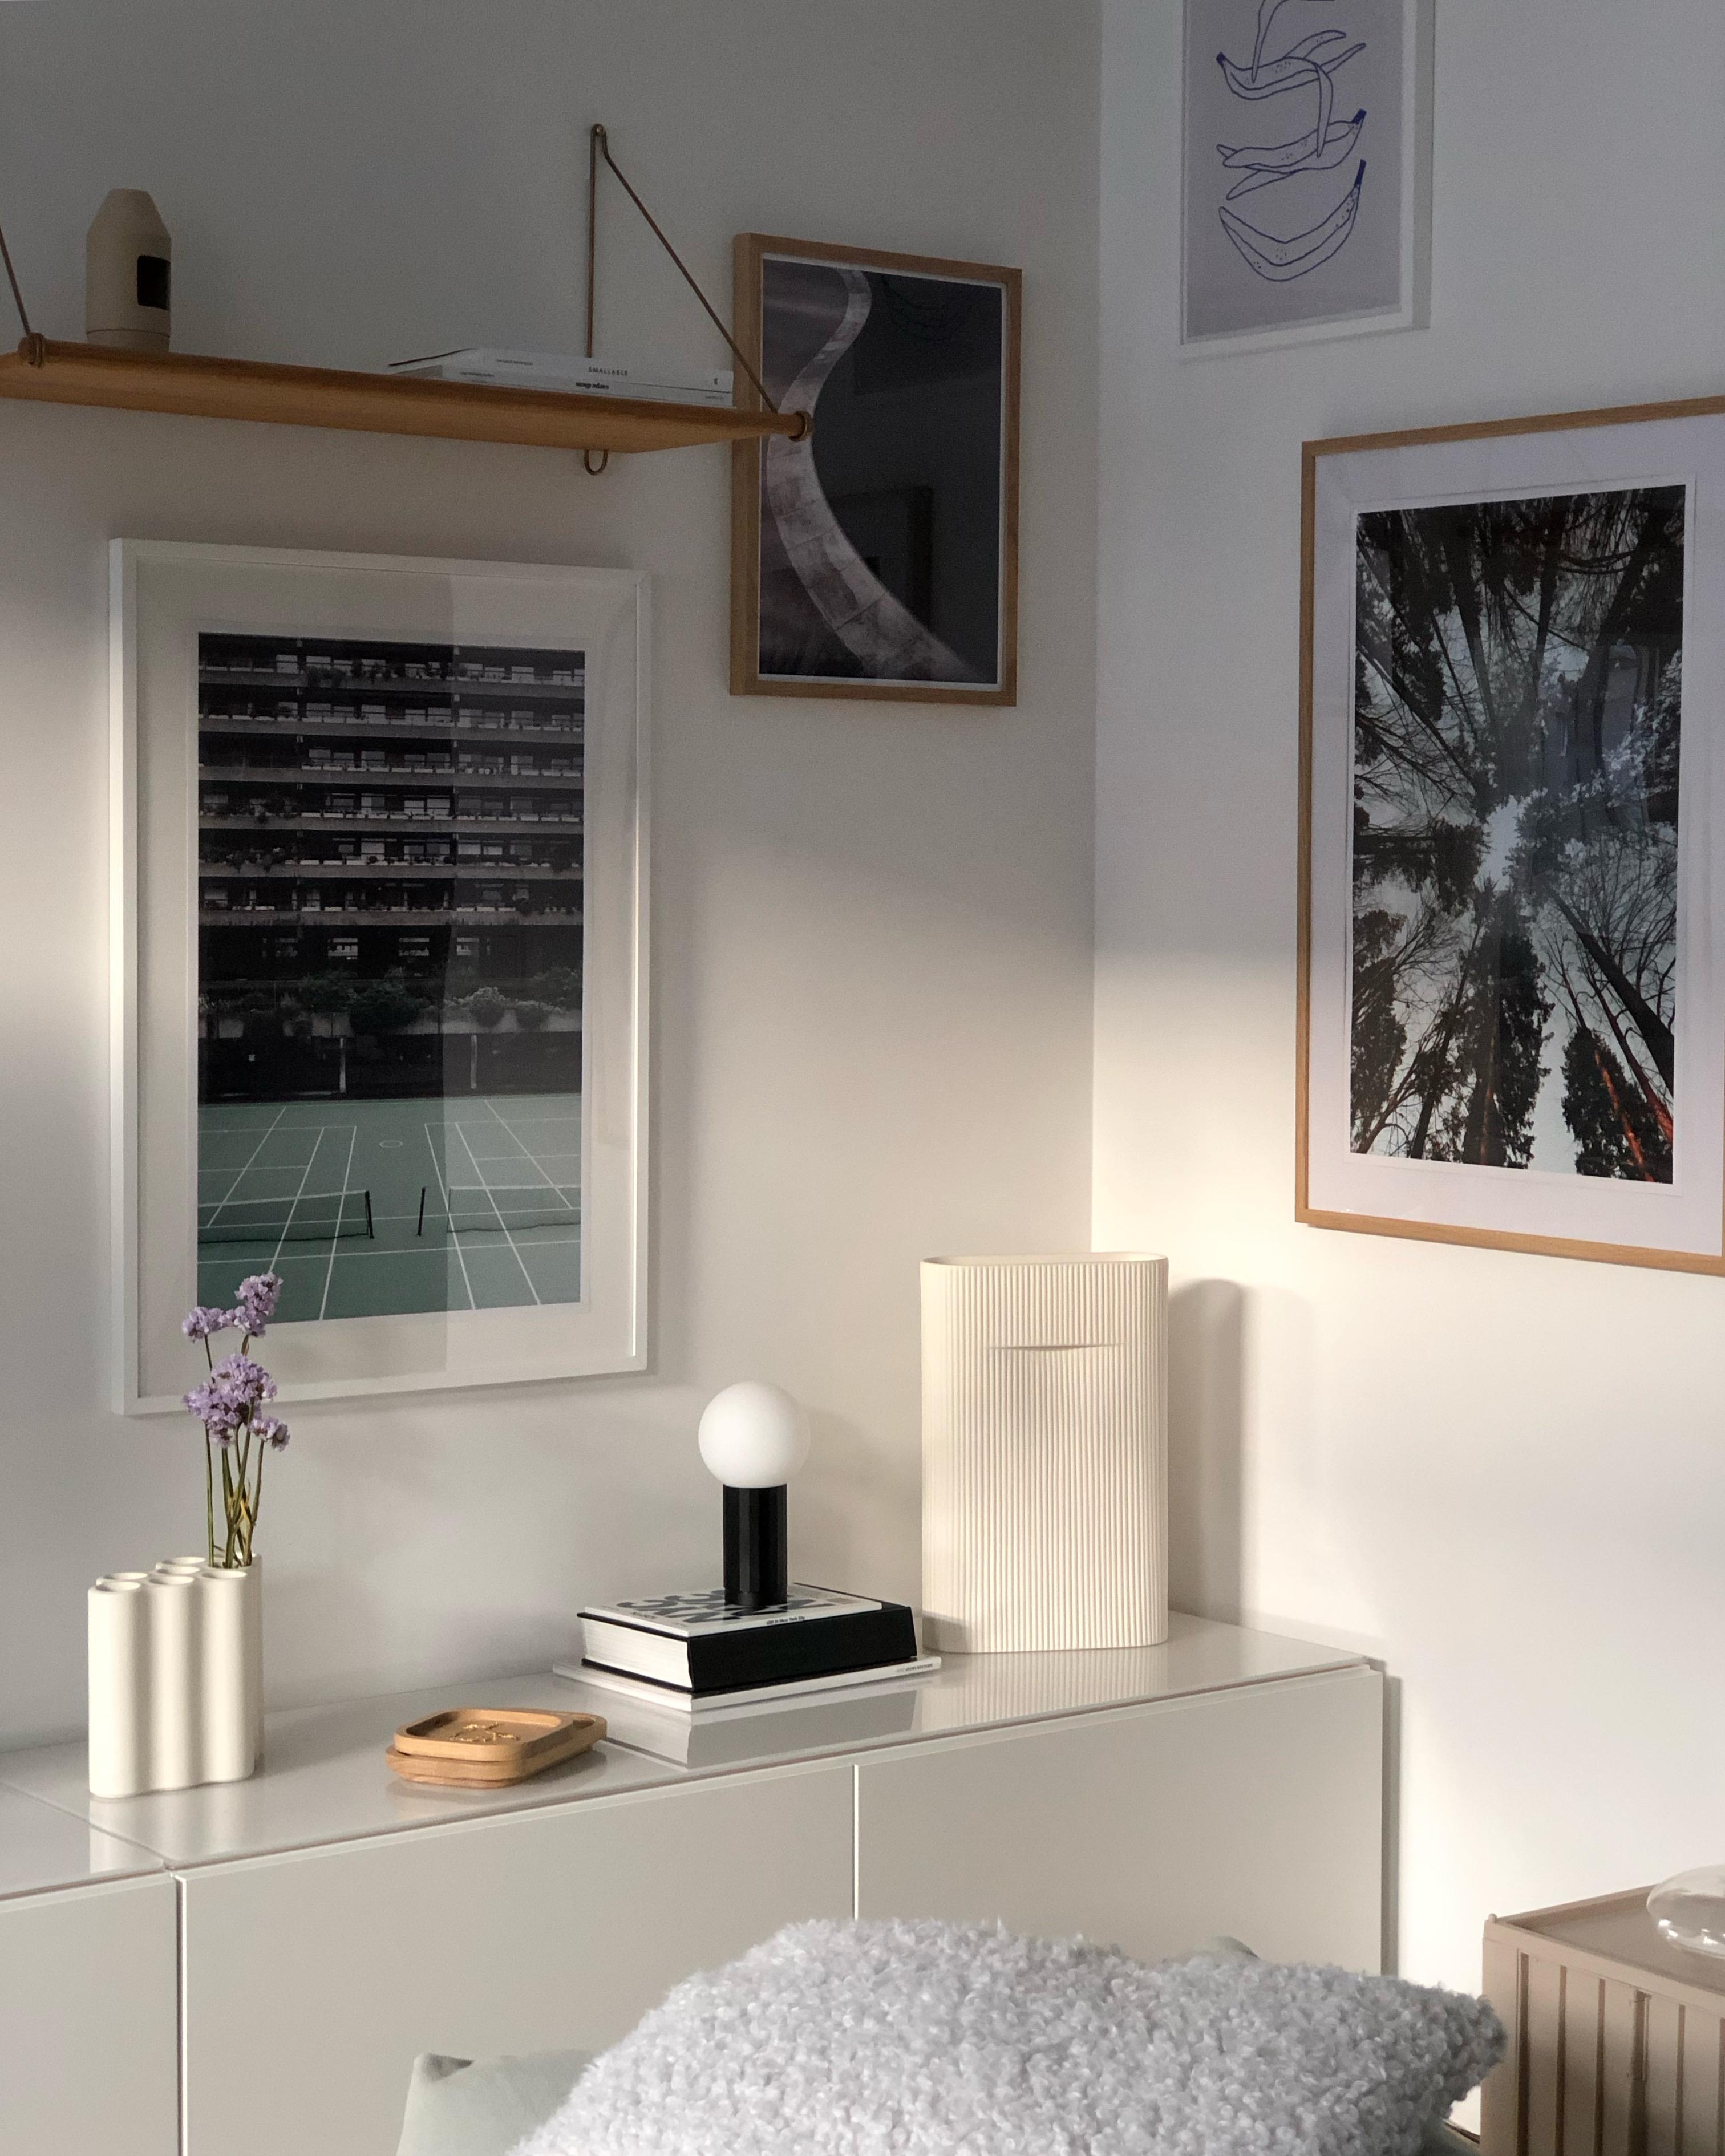 #wohnzimmer #livingroom #bilderwand #bildergalerie #wanddeko #wandgestaltung #regal #ikea #besta #skandinavisch #deko #couchstyle